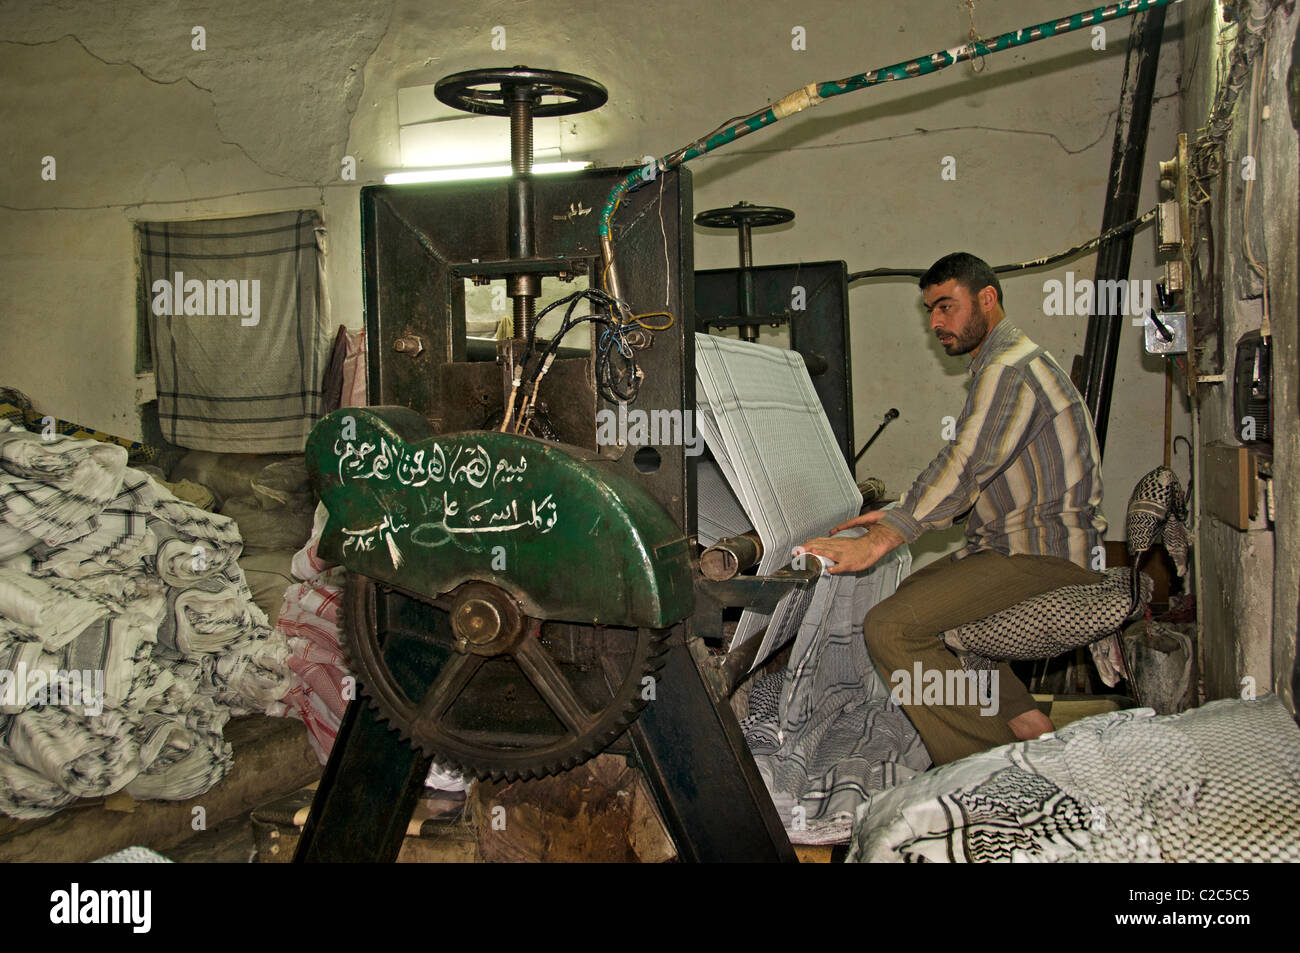 Damascus Syria Bazaar Souk Souq market shop laundry dry cleaning press shop Stock Photo